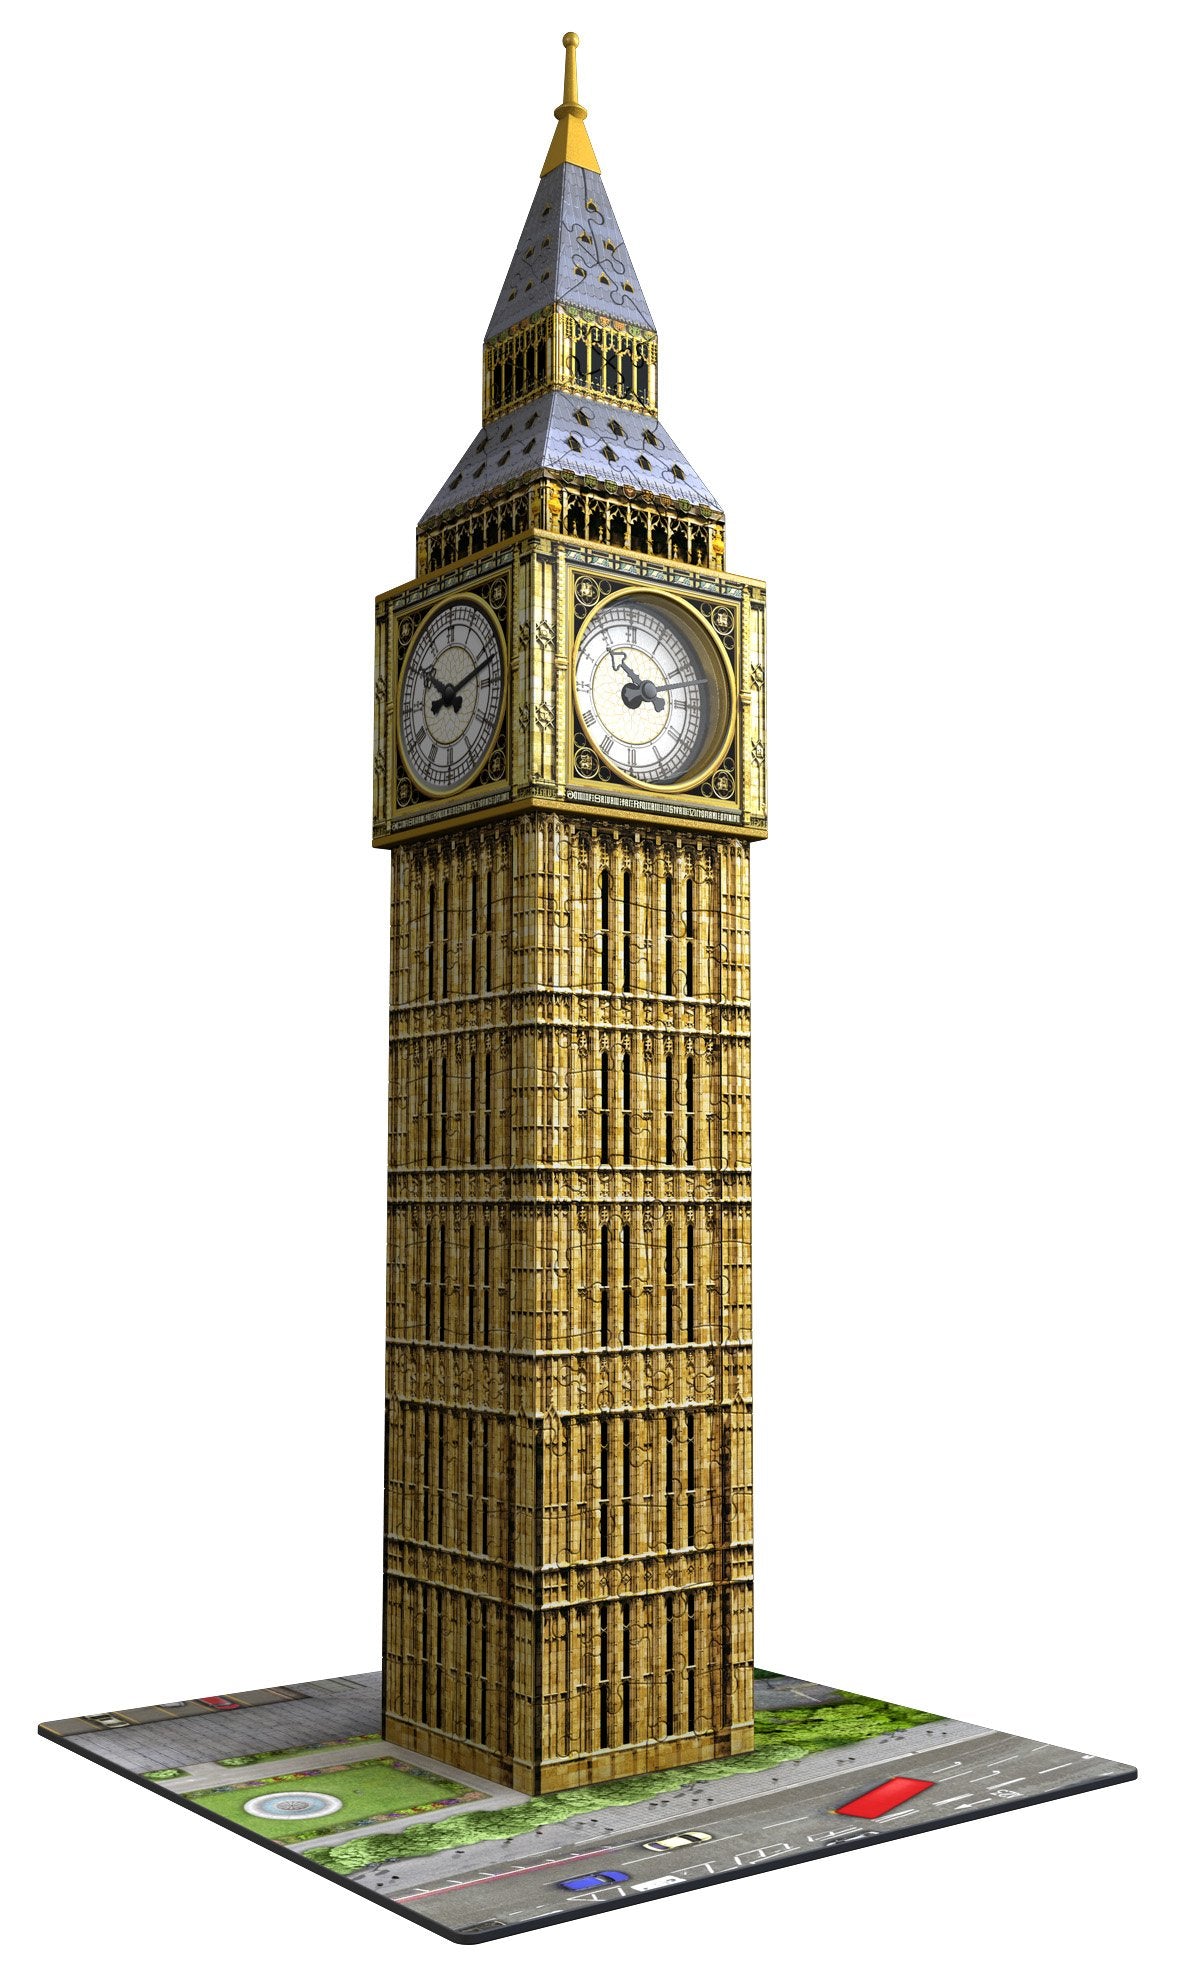 Ravensburger Big Ben with Clock, 216pc 3D Jigsaw Puzzle